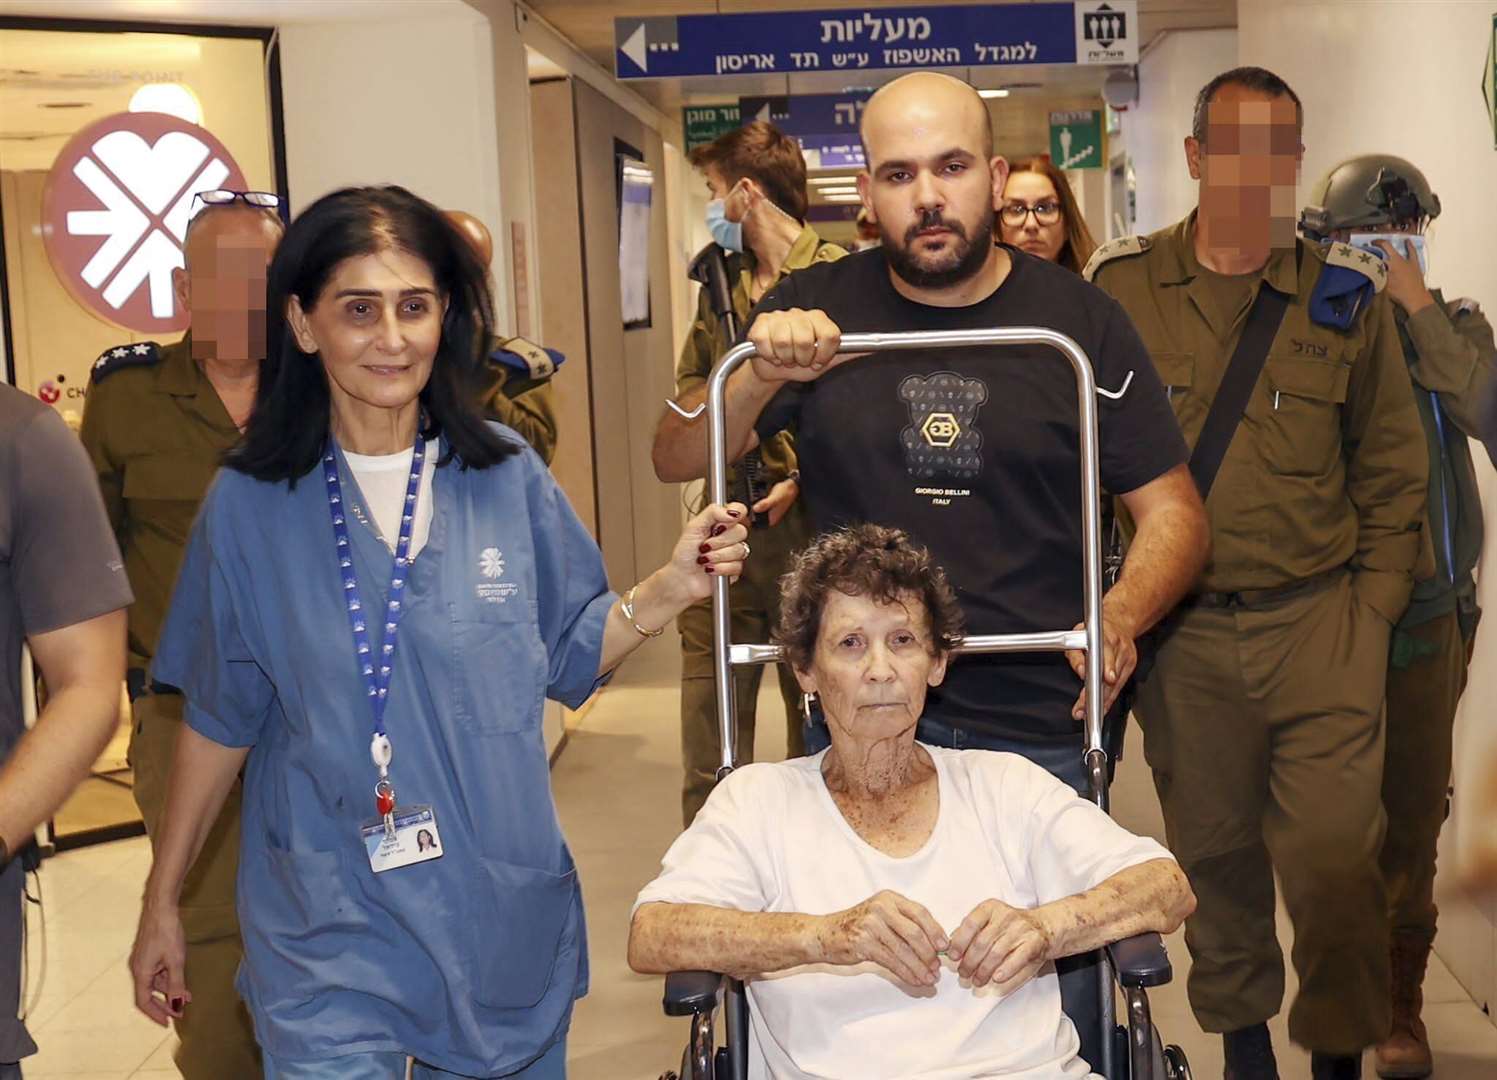 Yocheved Lifshitz, one of two women released from Hamas captivity late, at a hospital in Tel Aviv (Jenny Yerushalmy/Ichilov hospital/AP)